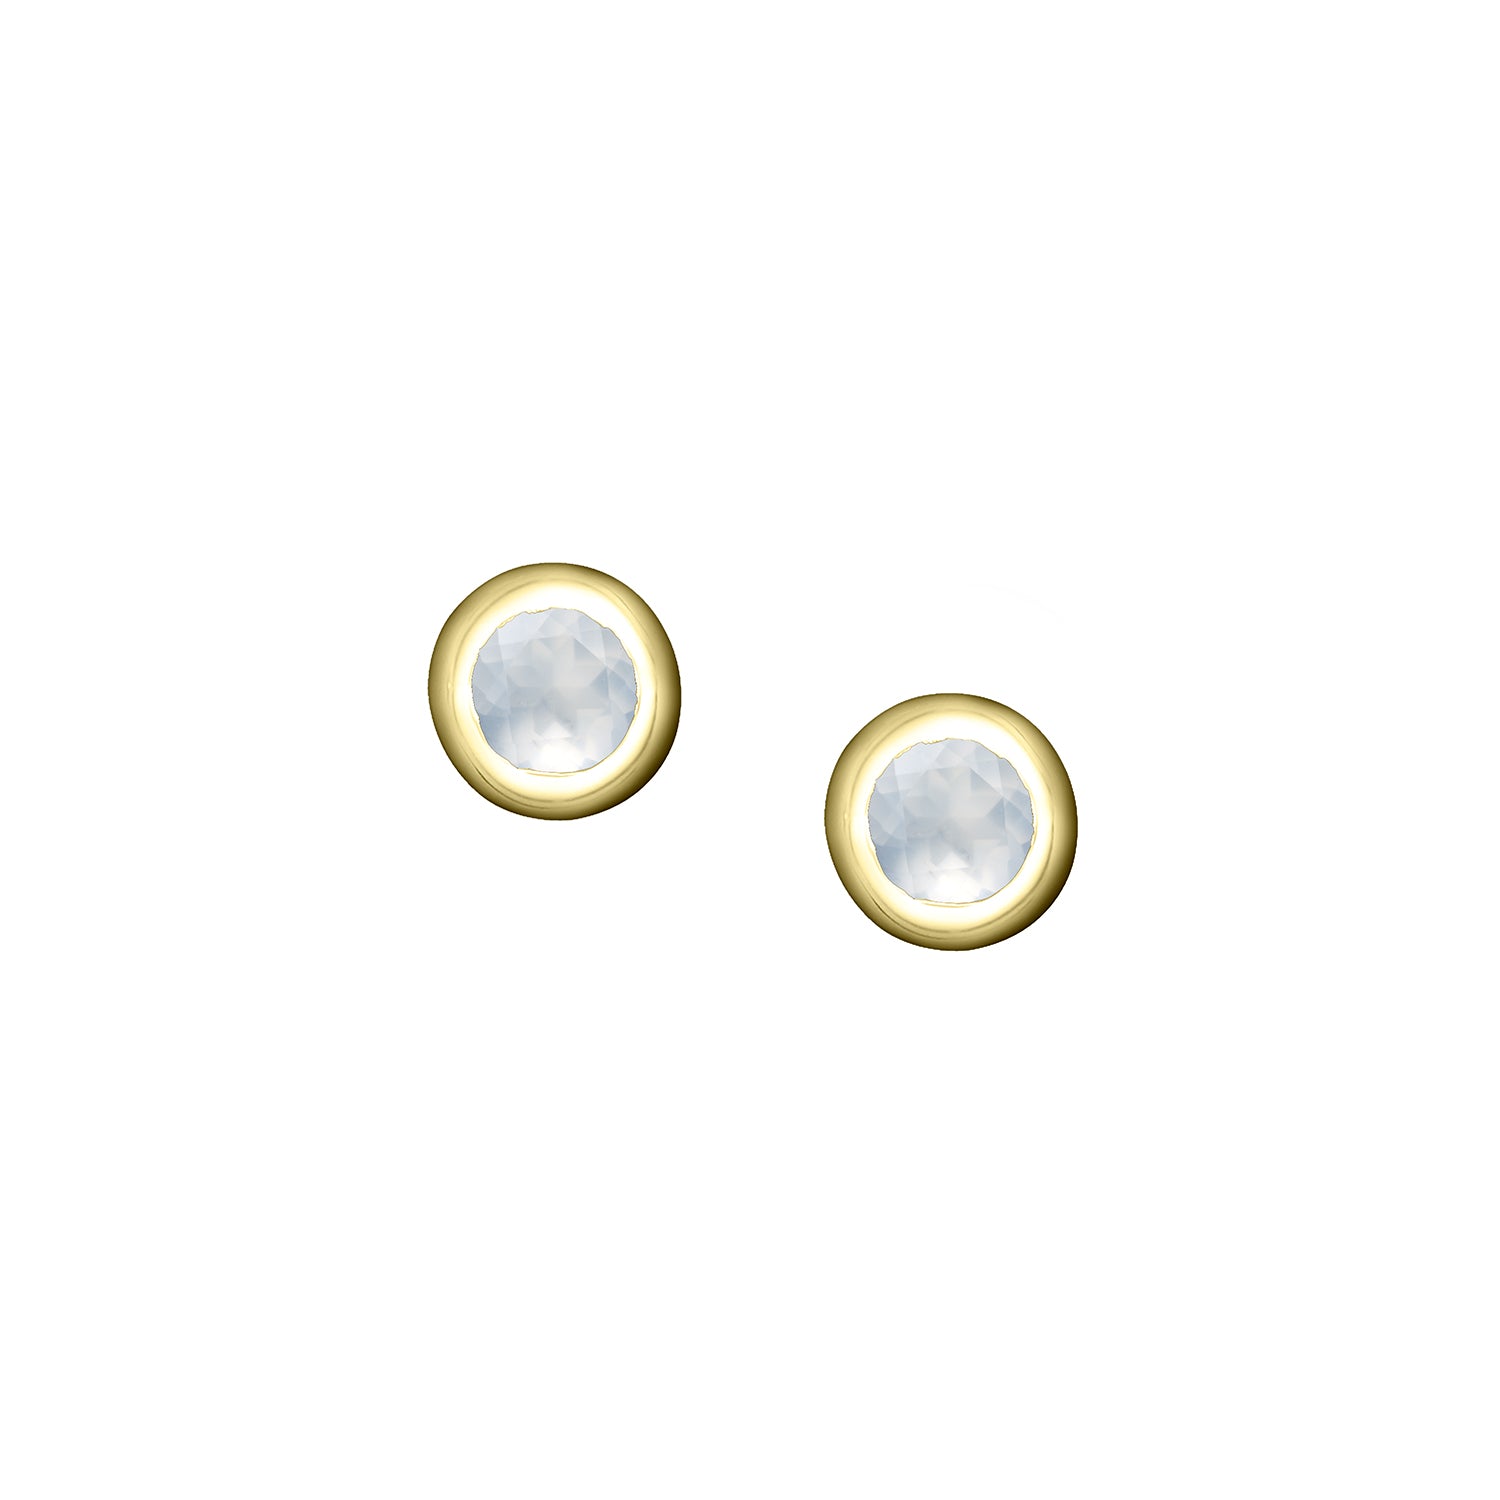 Polished Gold Vermeil Crescent Moon Birthstone Earrings - June / Moonstone